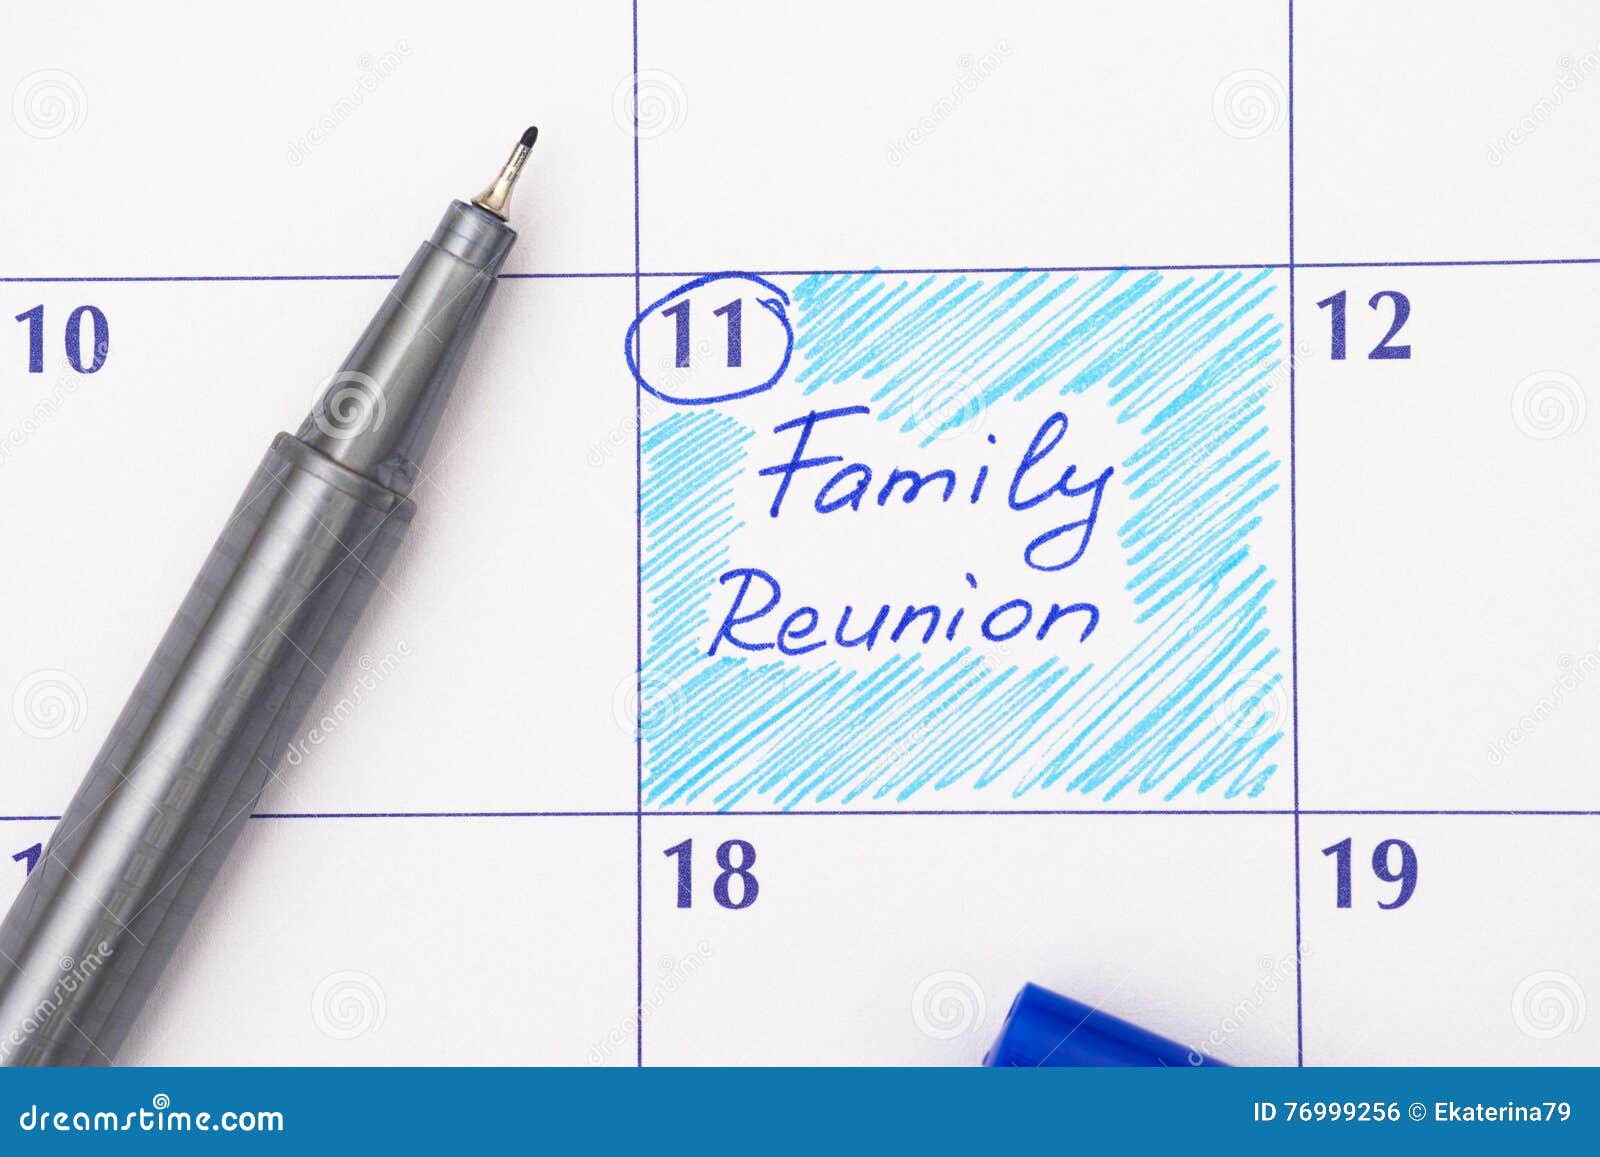 reminder family reunion in calendar